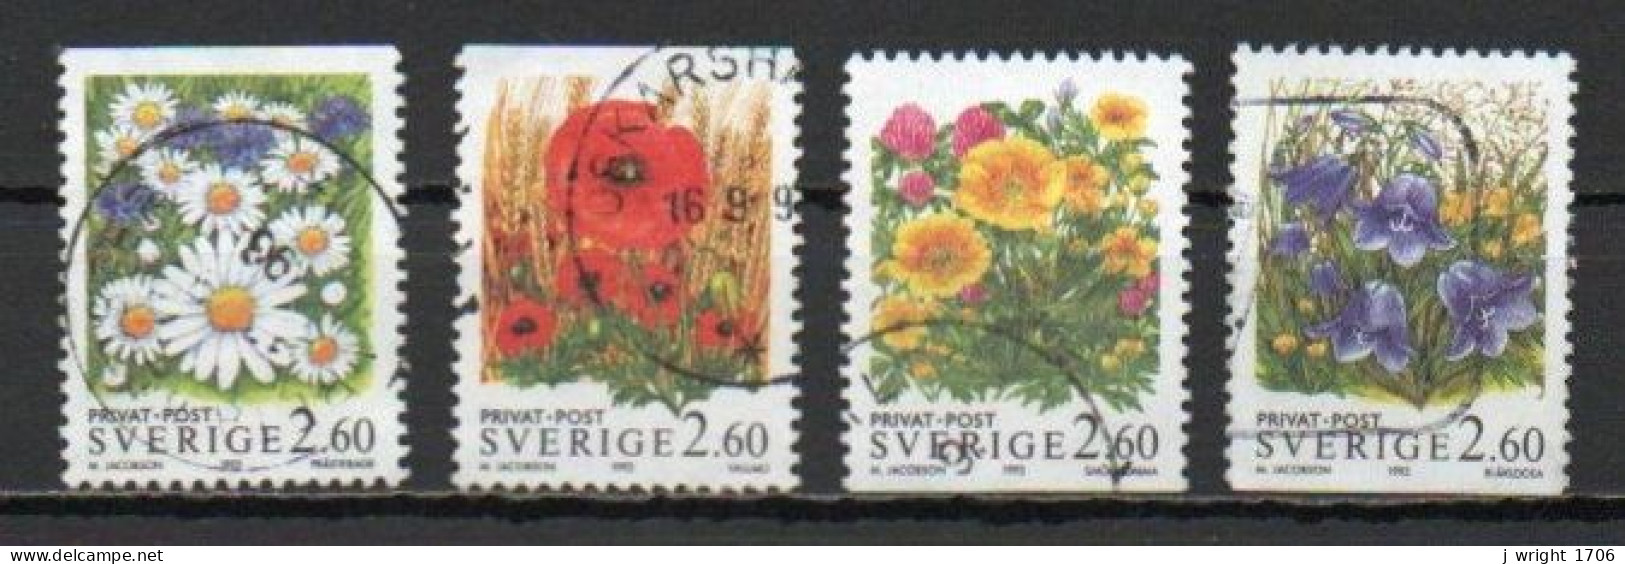 Sweden, 1993, Rebate Stamps/Flowers, Set, USED - Usati